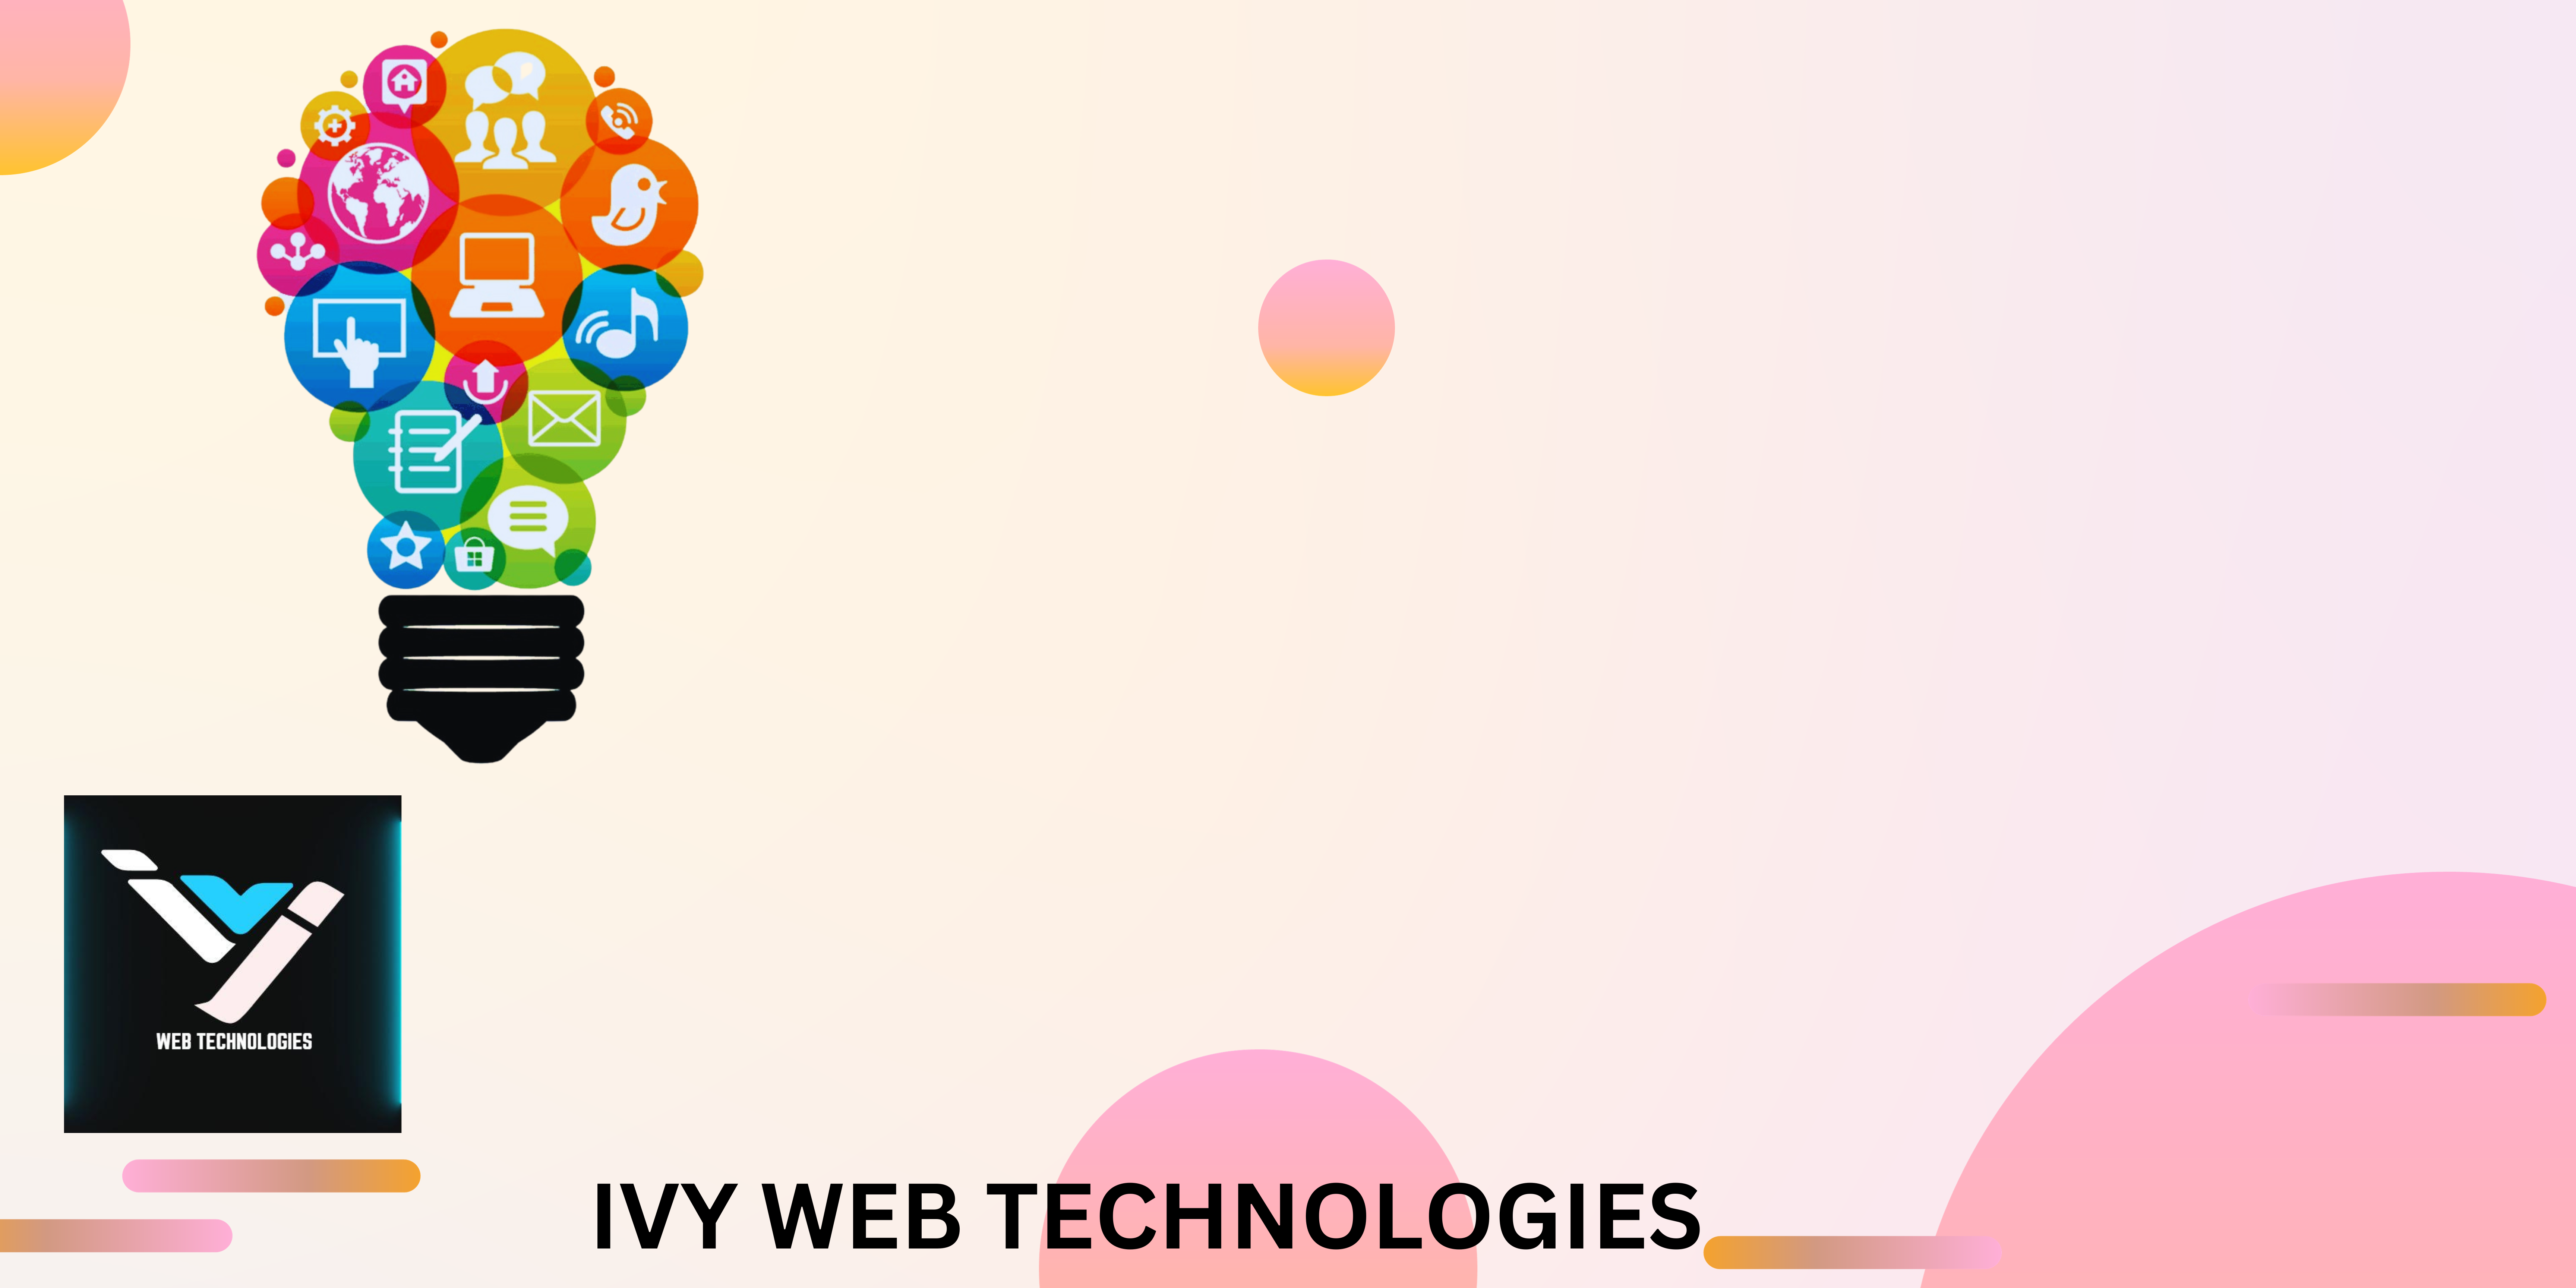 IVY WEB TECHNOLOGIES